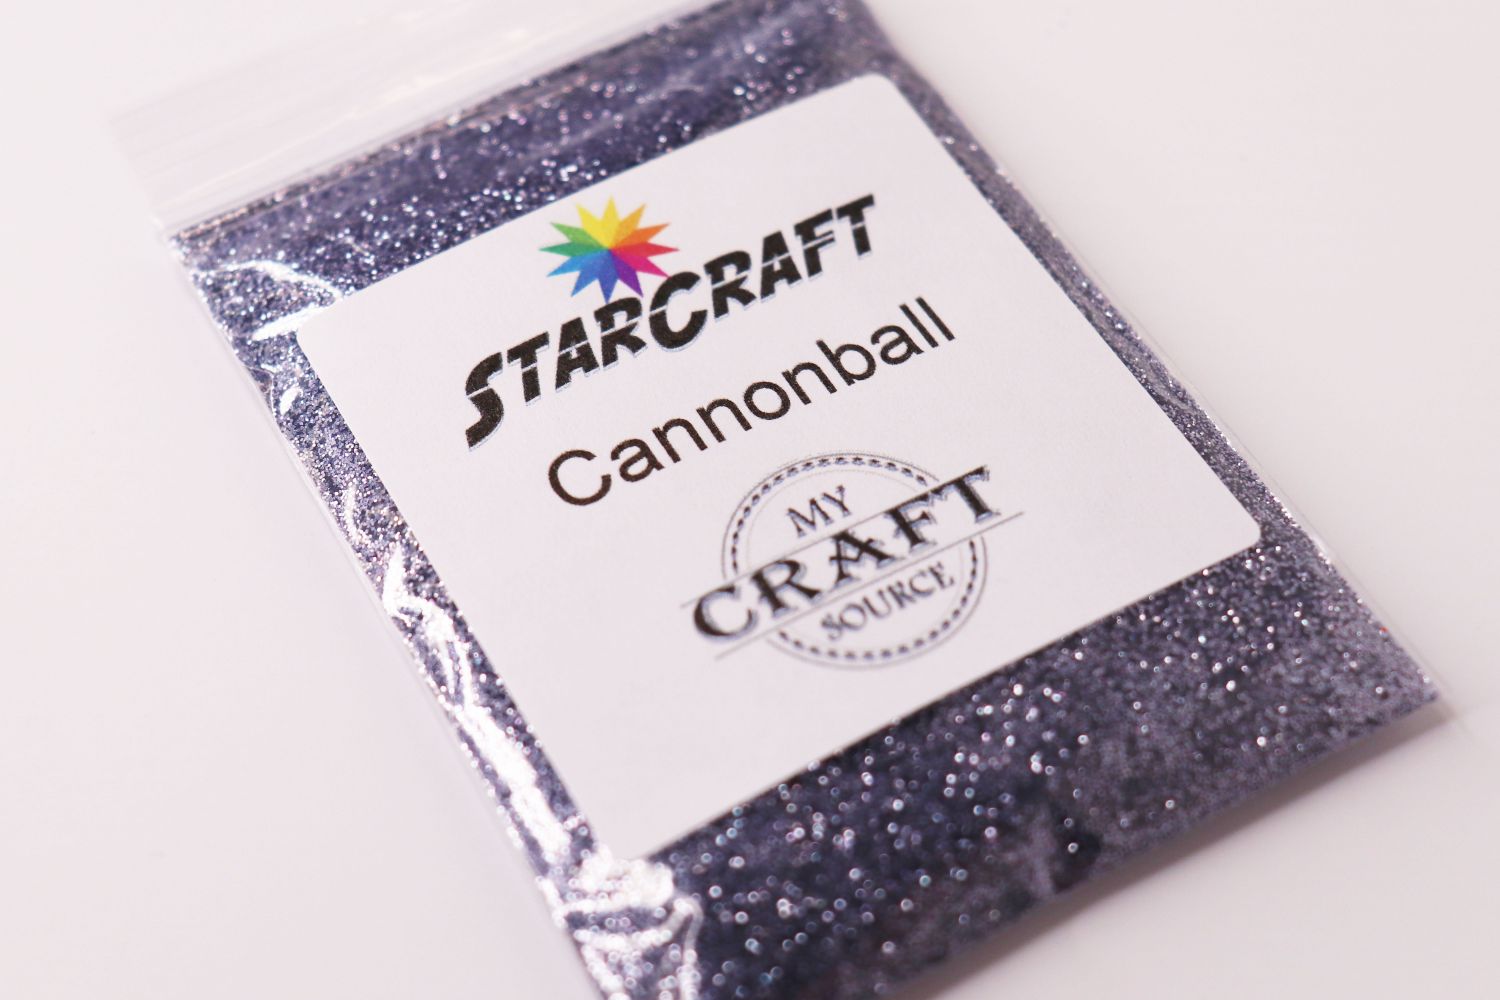 StarCraft Metallic Glitter - Cannonball - 0.5 oz